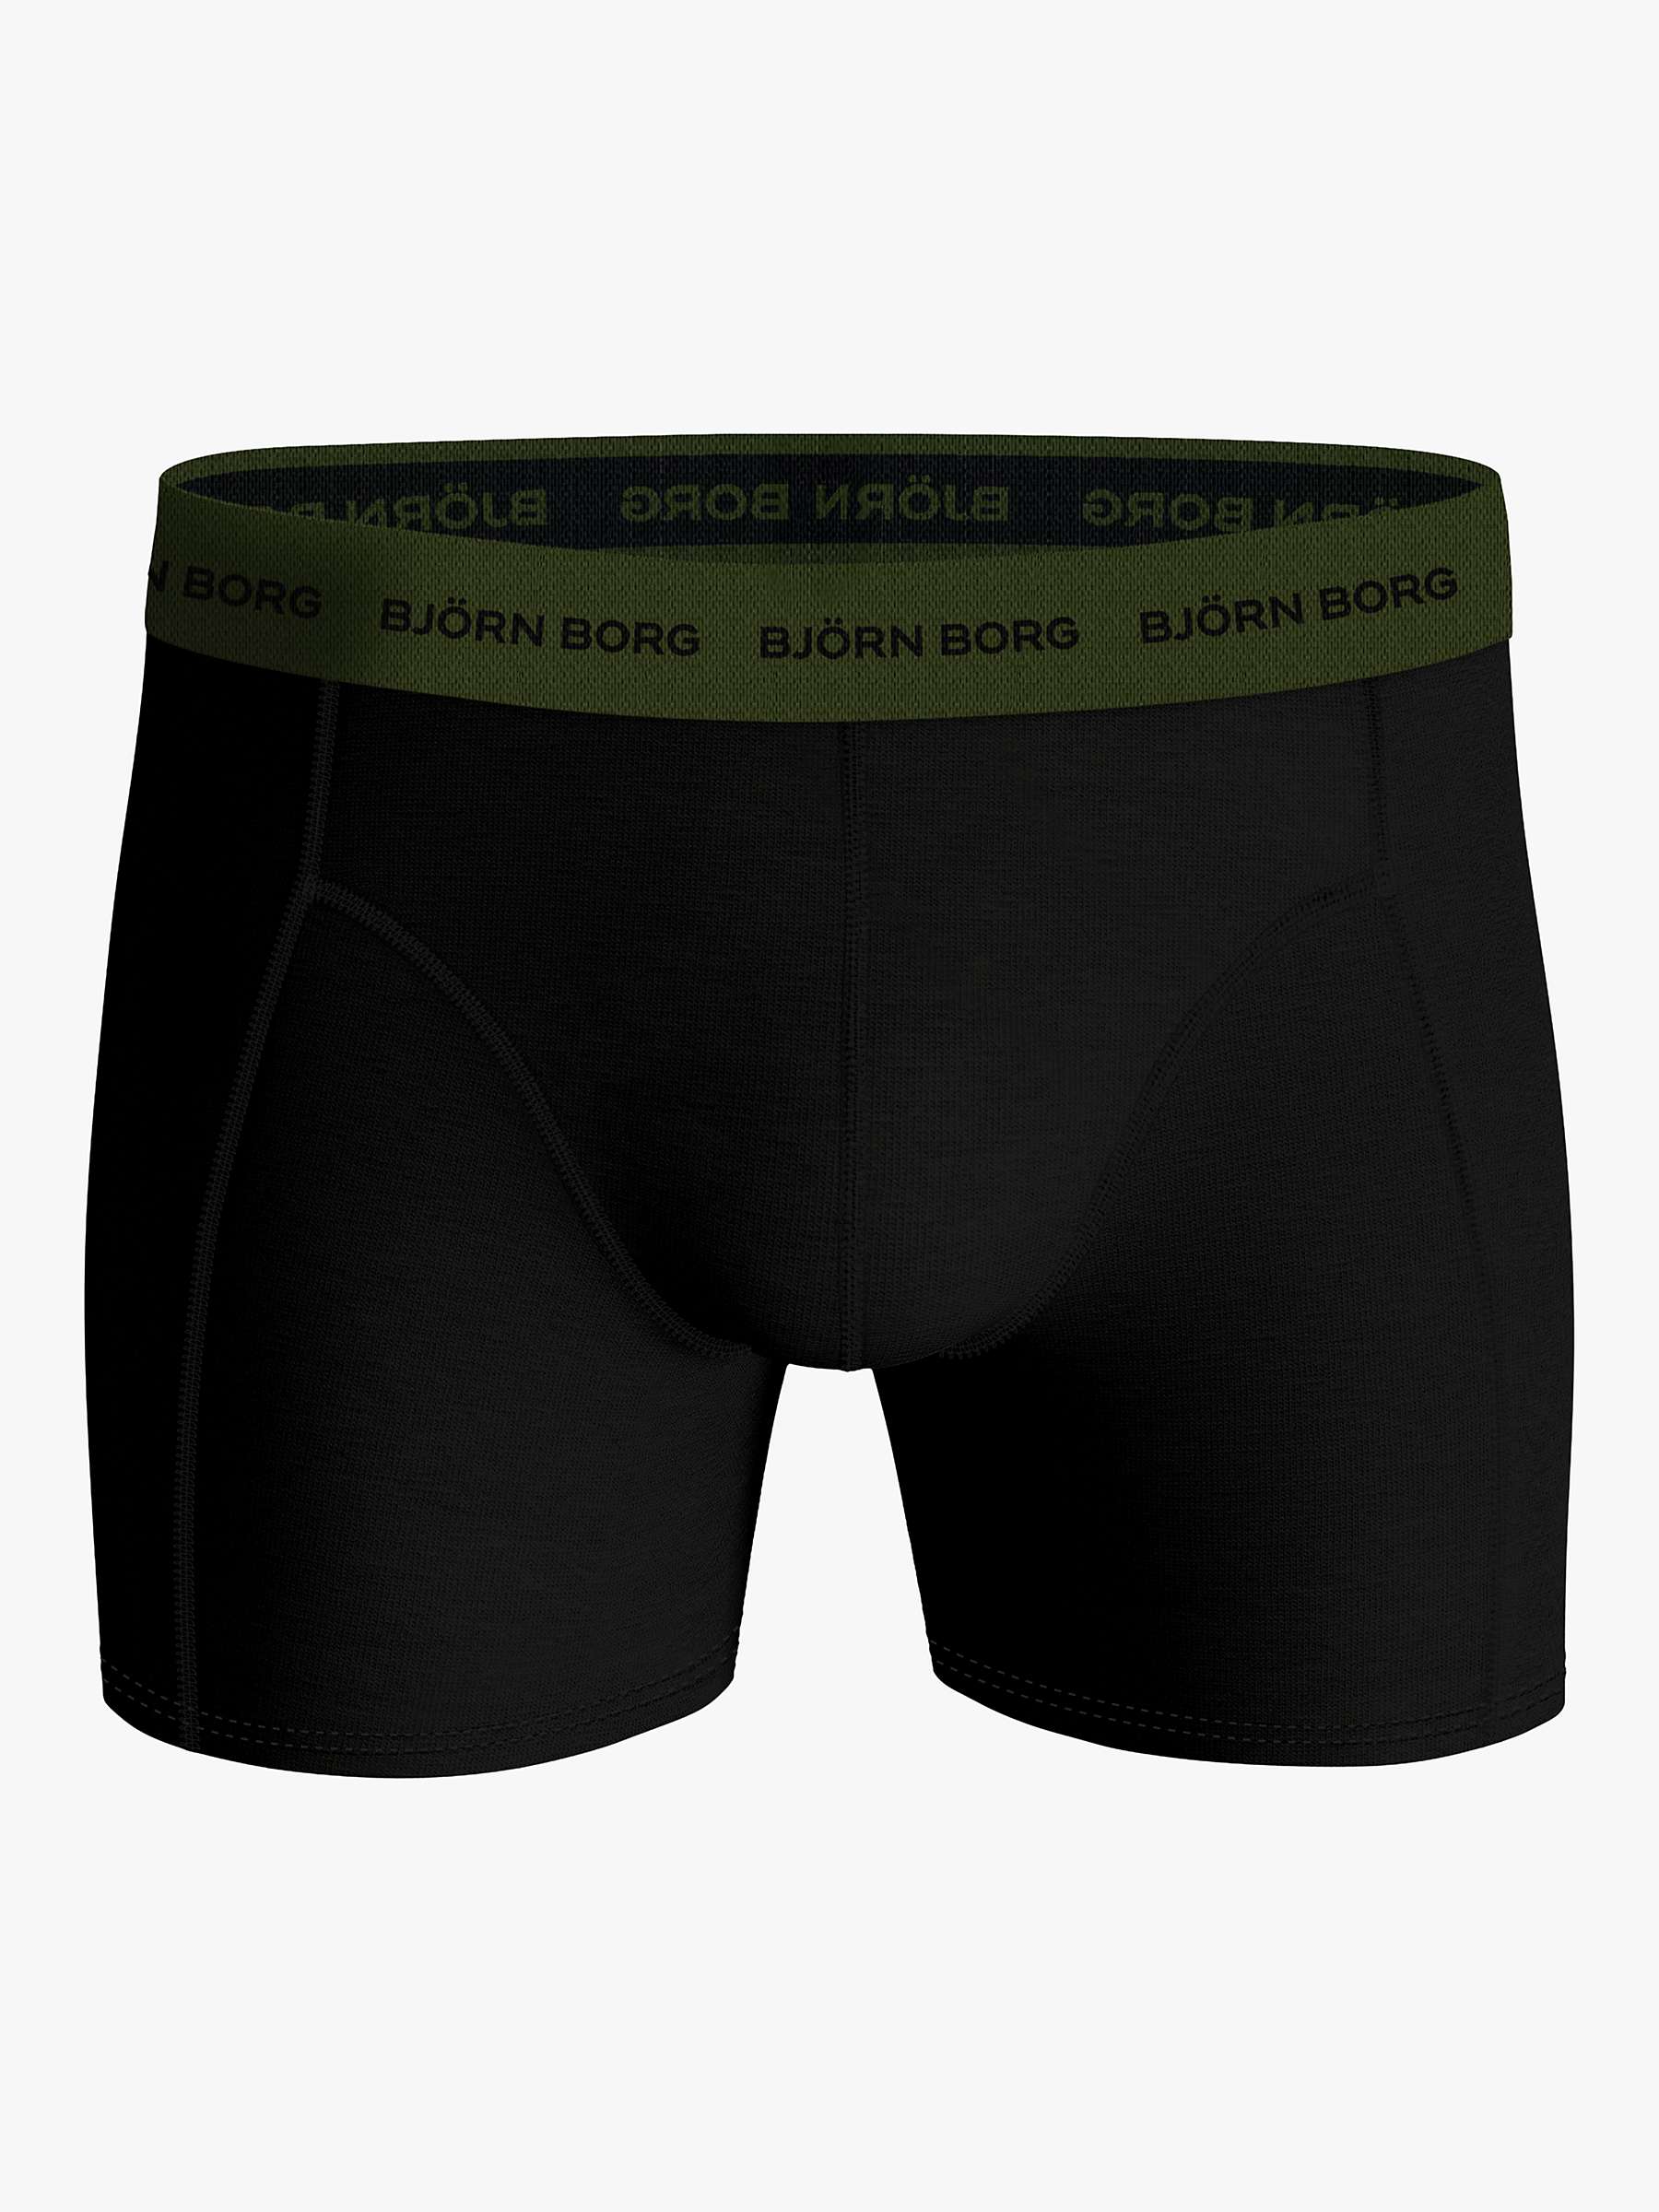 Buy Björn Borg Cotton Blend Stretch Trunks, Pack of 5, Green/Black/Grey Online at johnlewis.com